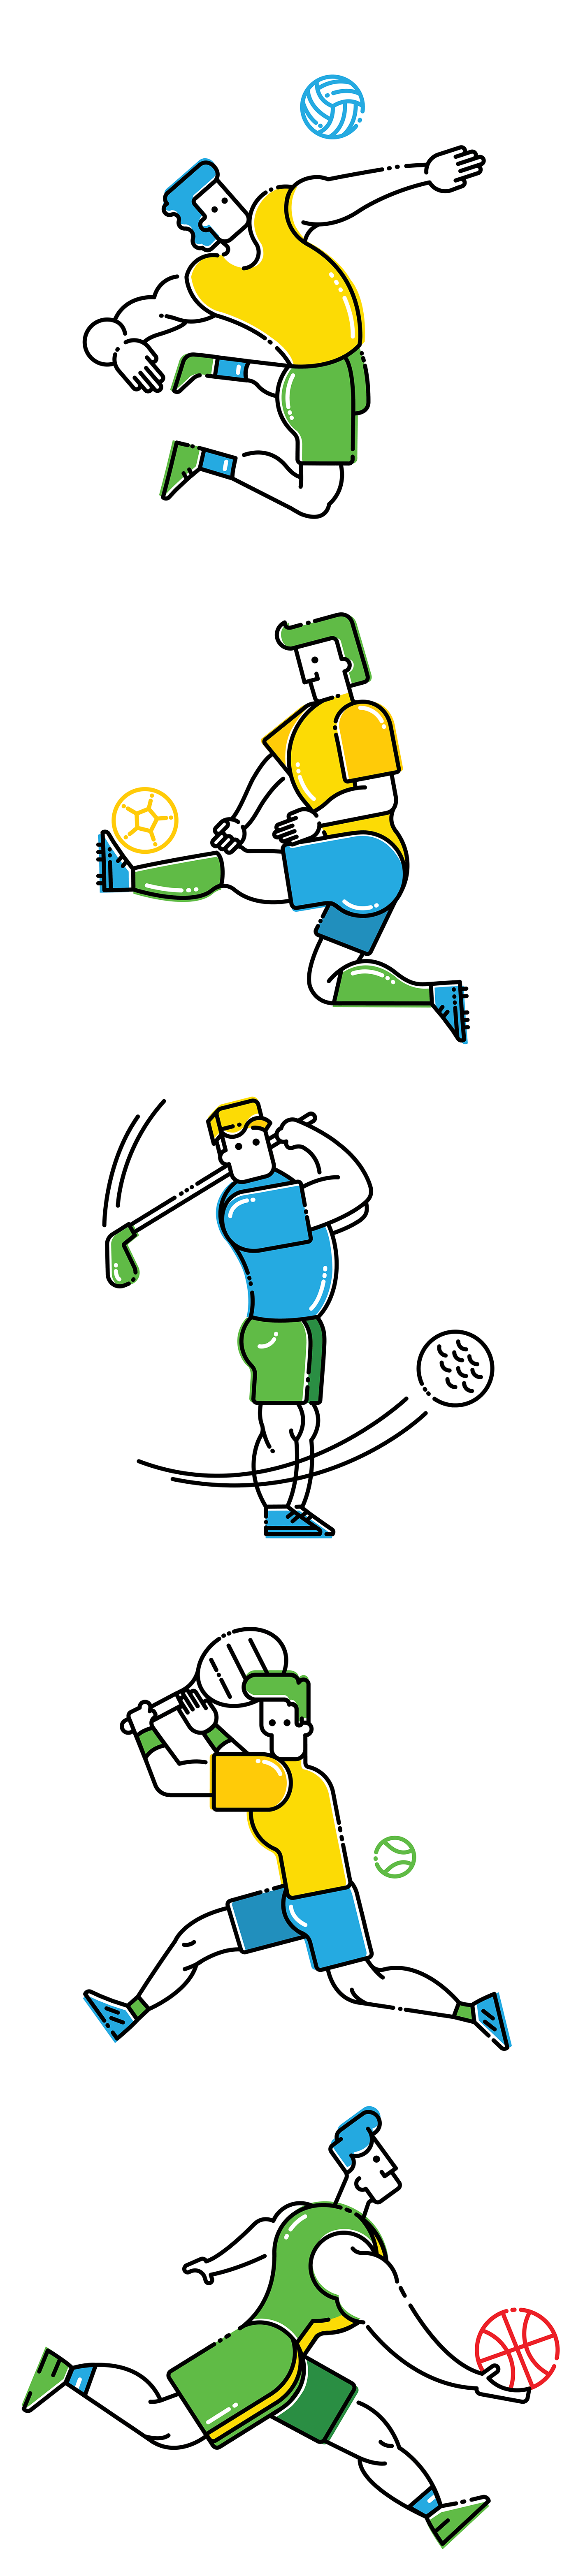 olympic balls rio 2016 atletas athletes olimpiadas icons iconography illustrations sports